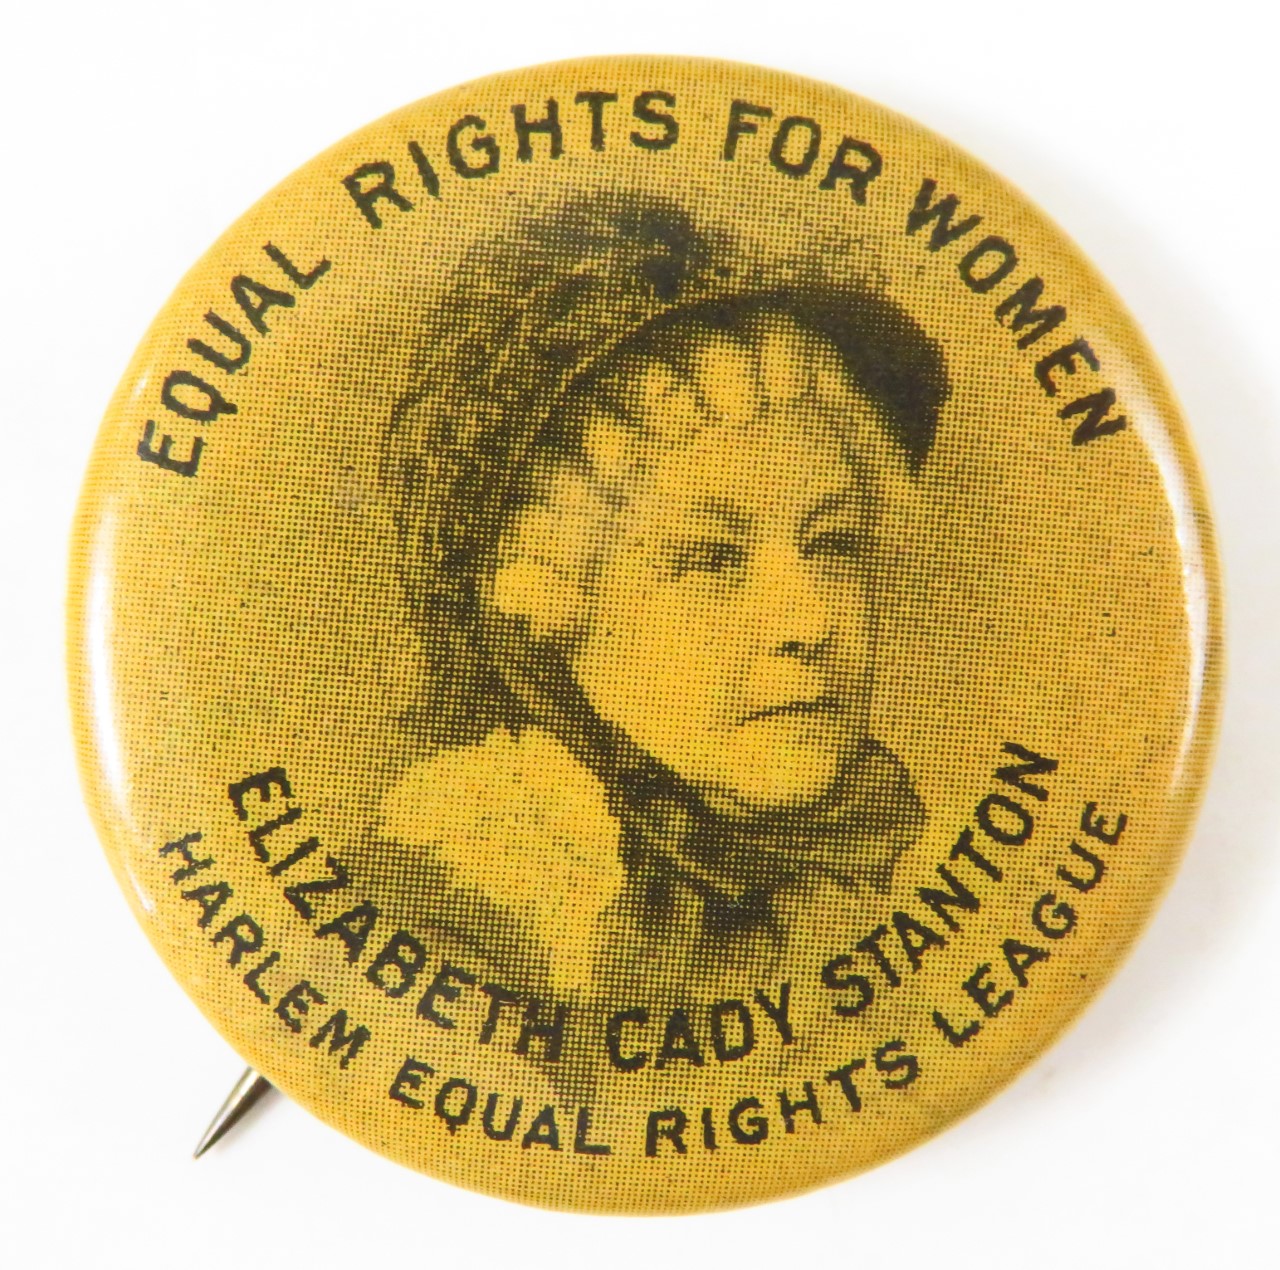 Button with portrait of Elizabeth Cady Stanton